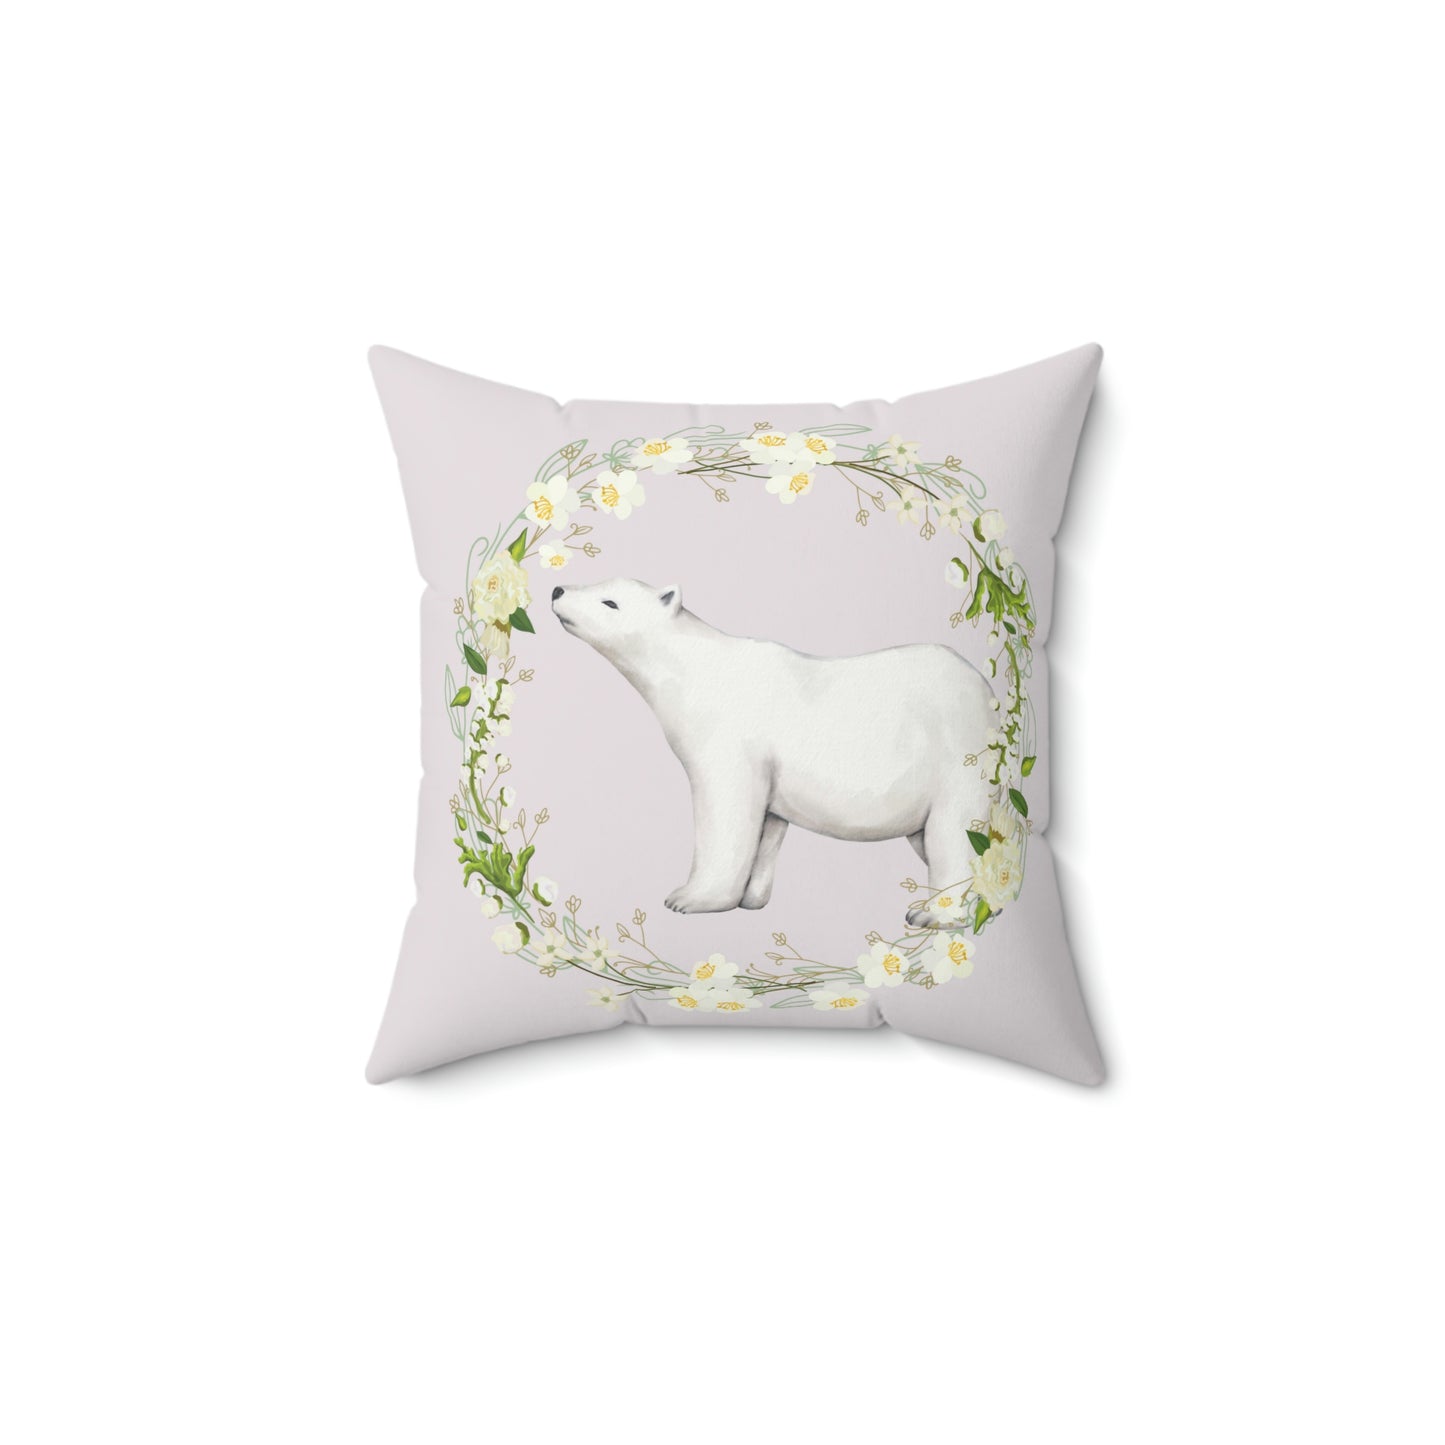 Pola Bear with Floral Wreath design Spun Polyester Square Indoor Pillow